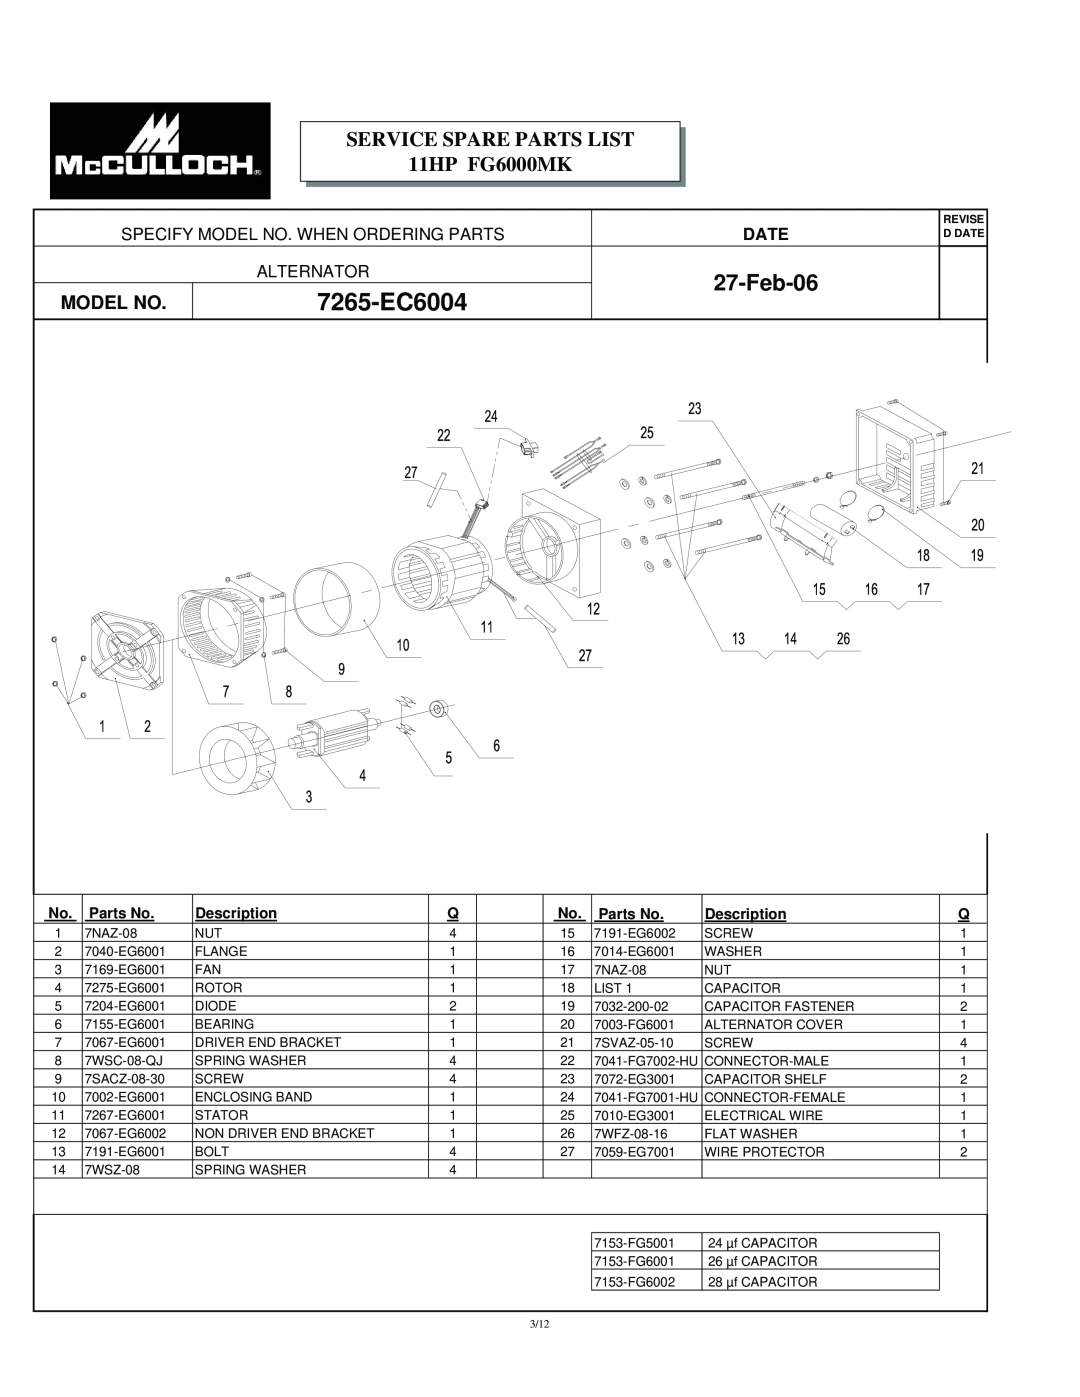 McCulloch 7096-FG6024 7265-EC6004, Feb-06, SERVICE SPARE PARTS LIST 11HP FG6000MK, Model No, Date, Alternator, Parts No 